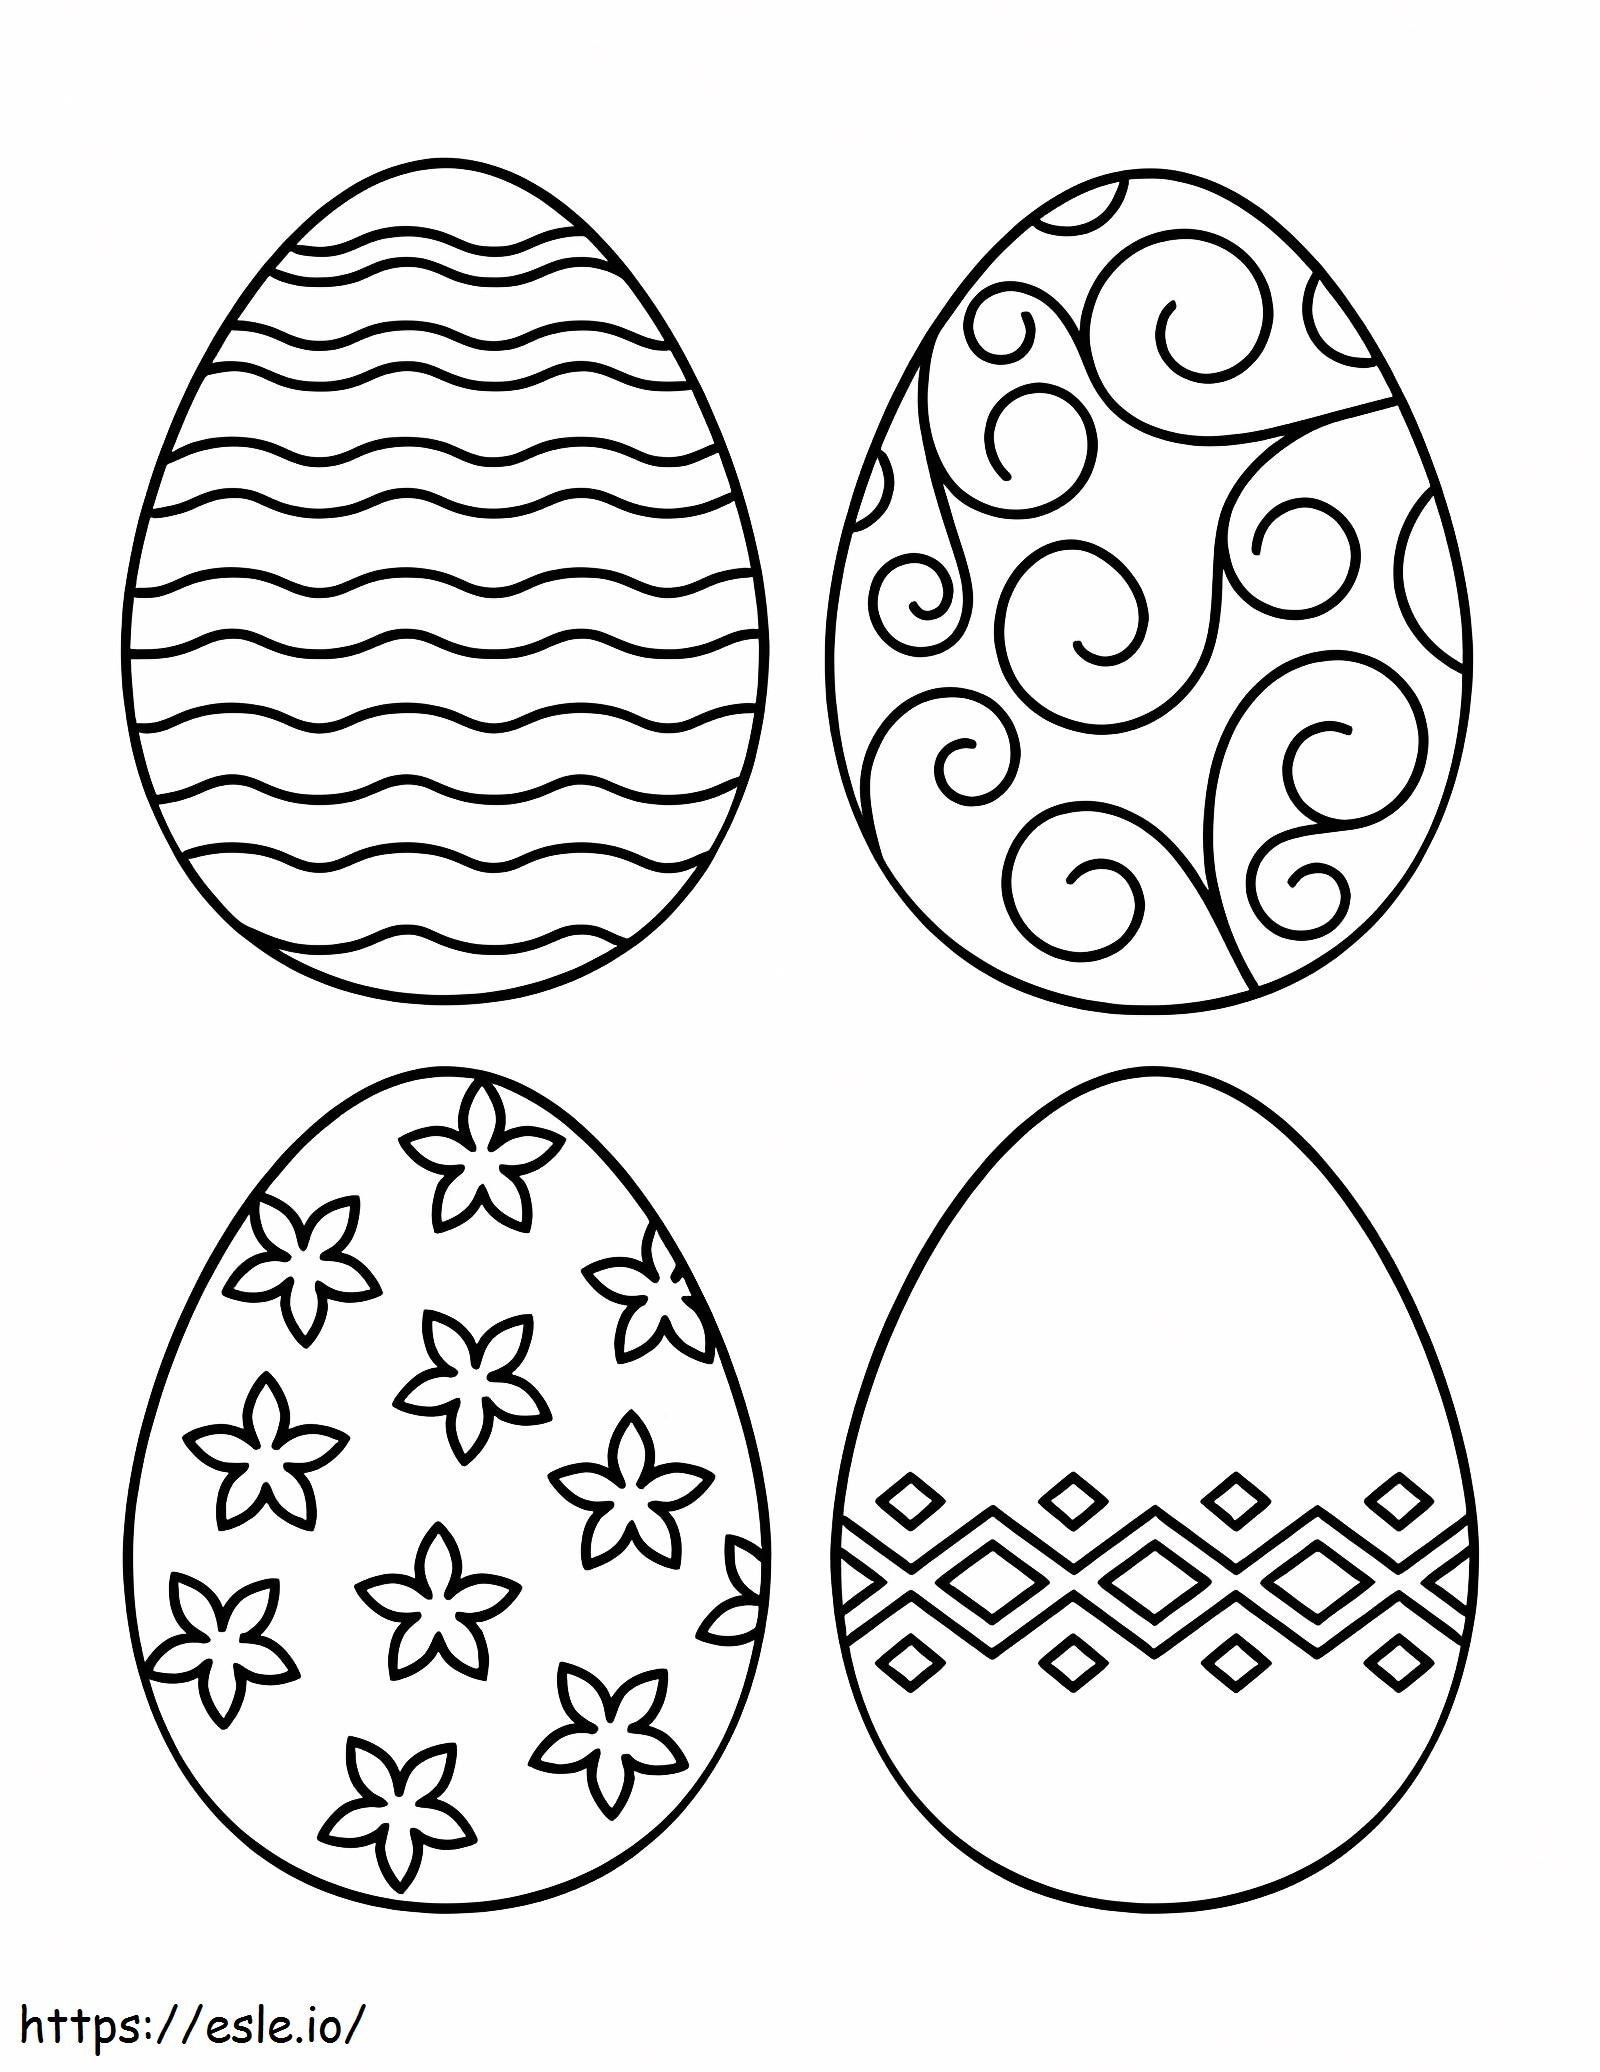 O ovo é para adultos para colorir